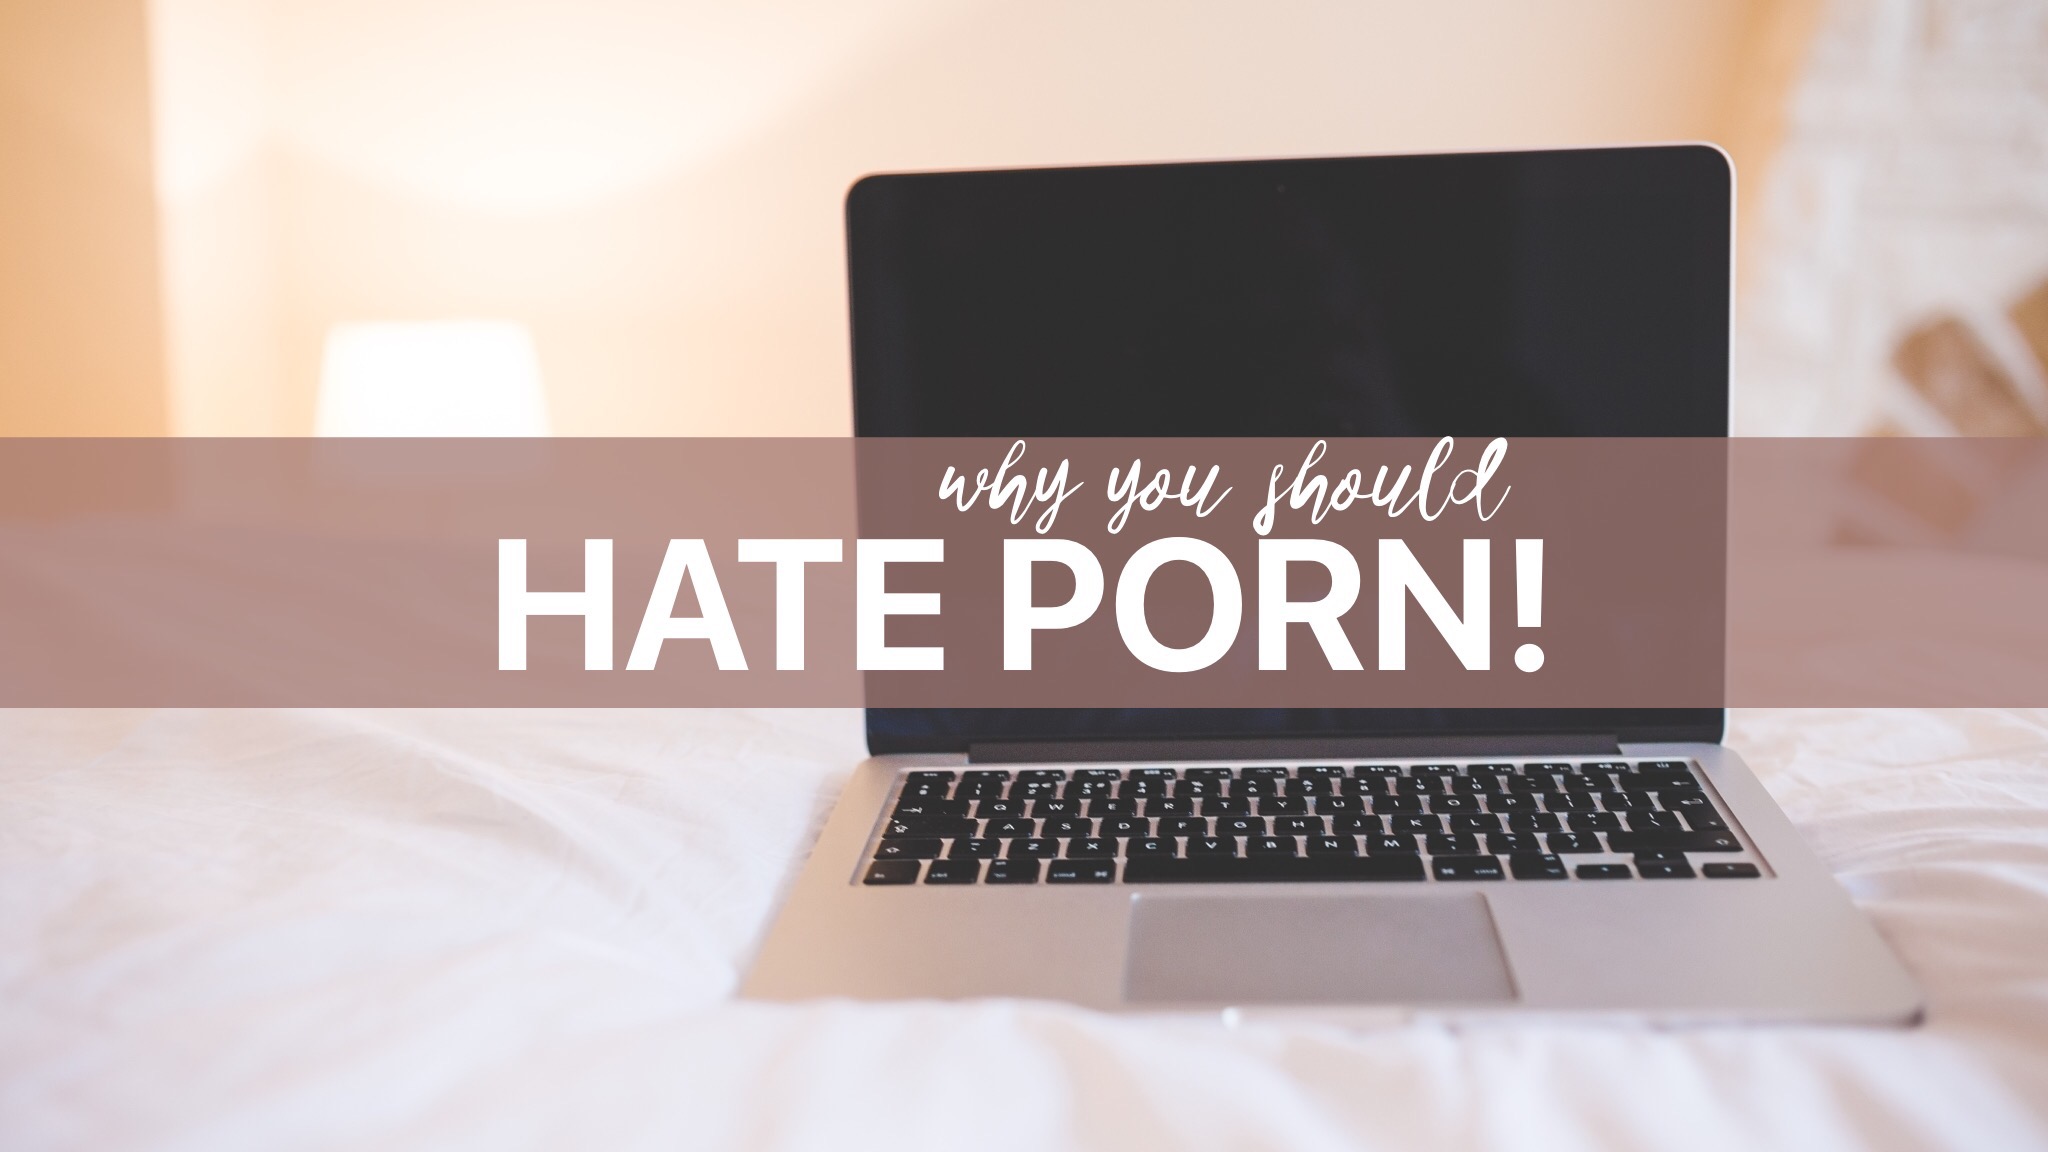 Hating porn